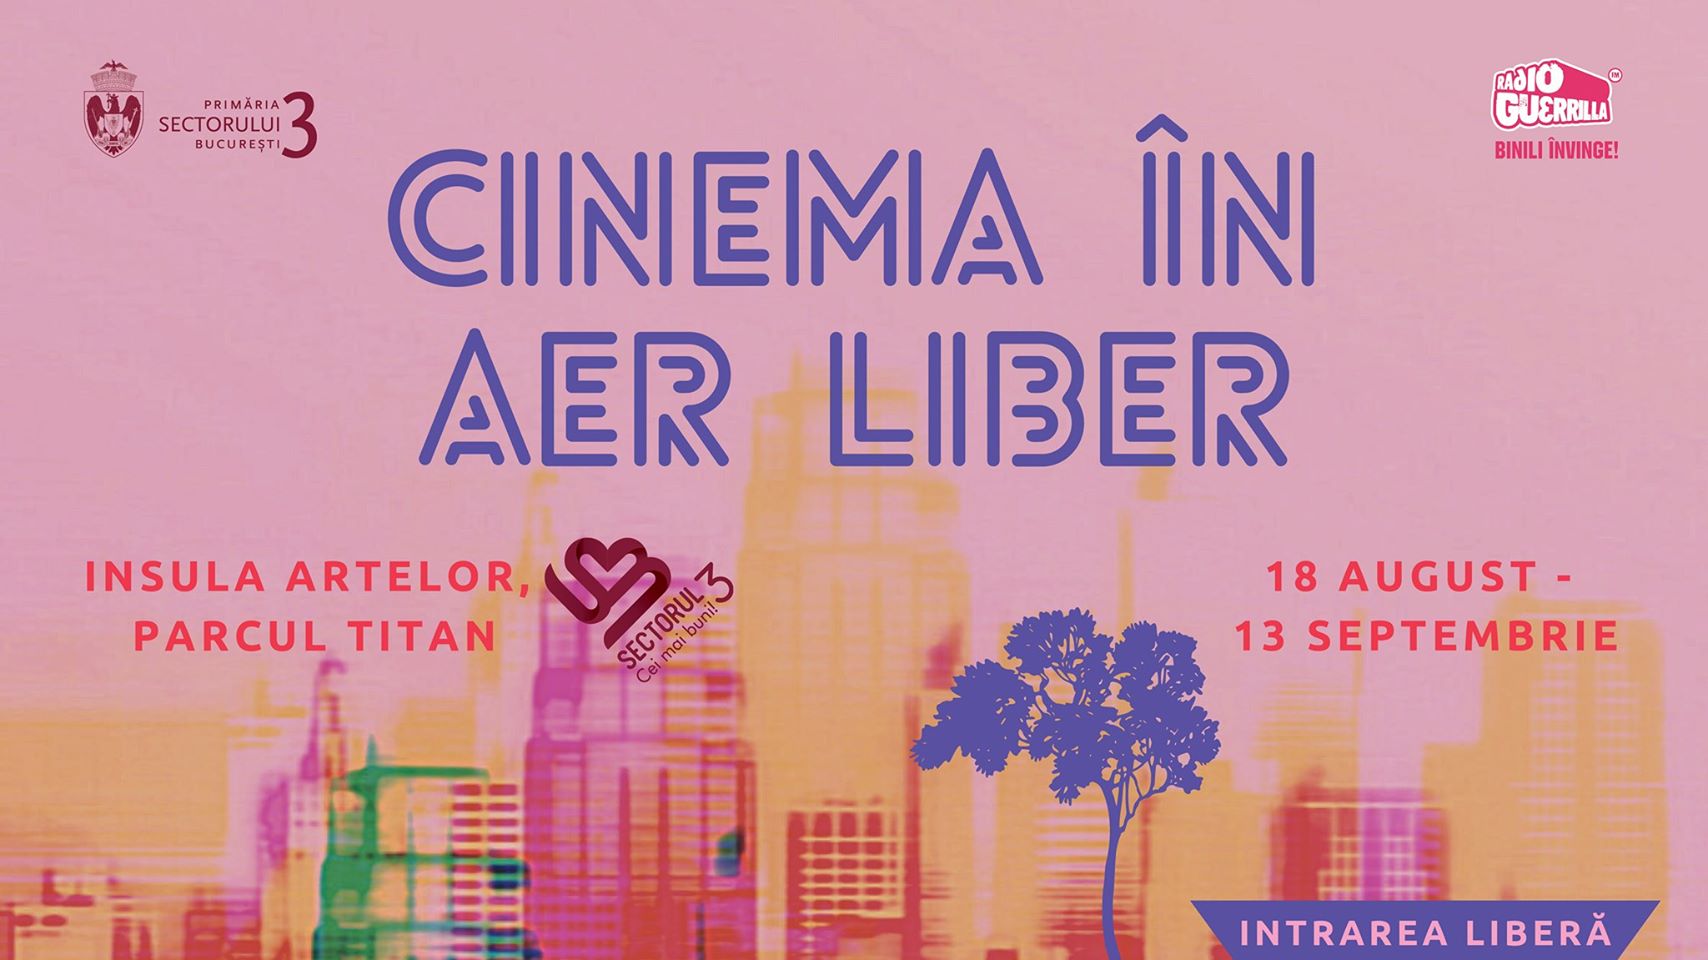 evenimente weekend 28-30 august
cinema in aer liber Titan